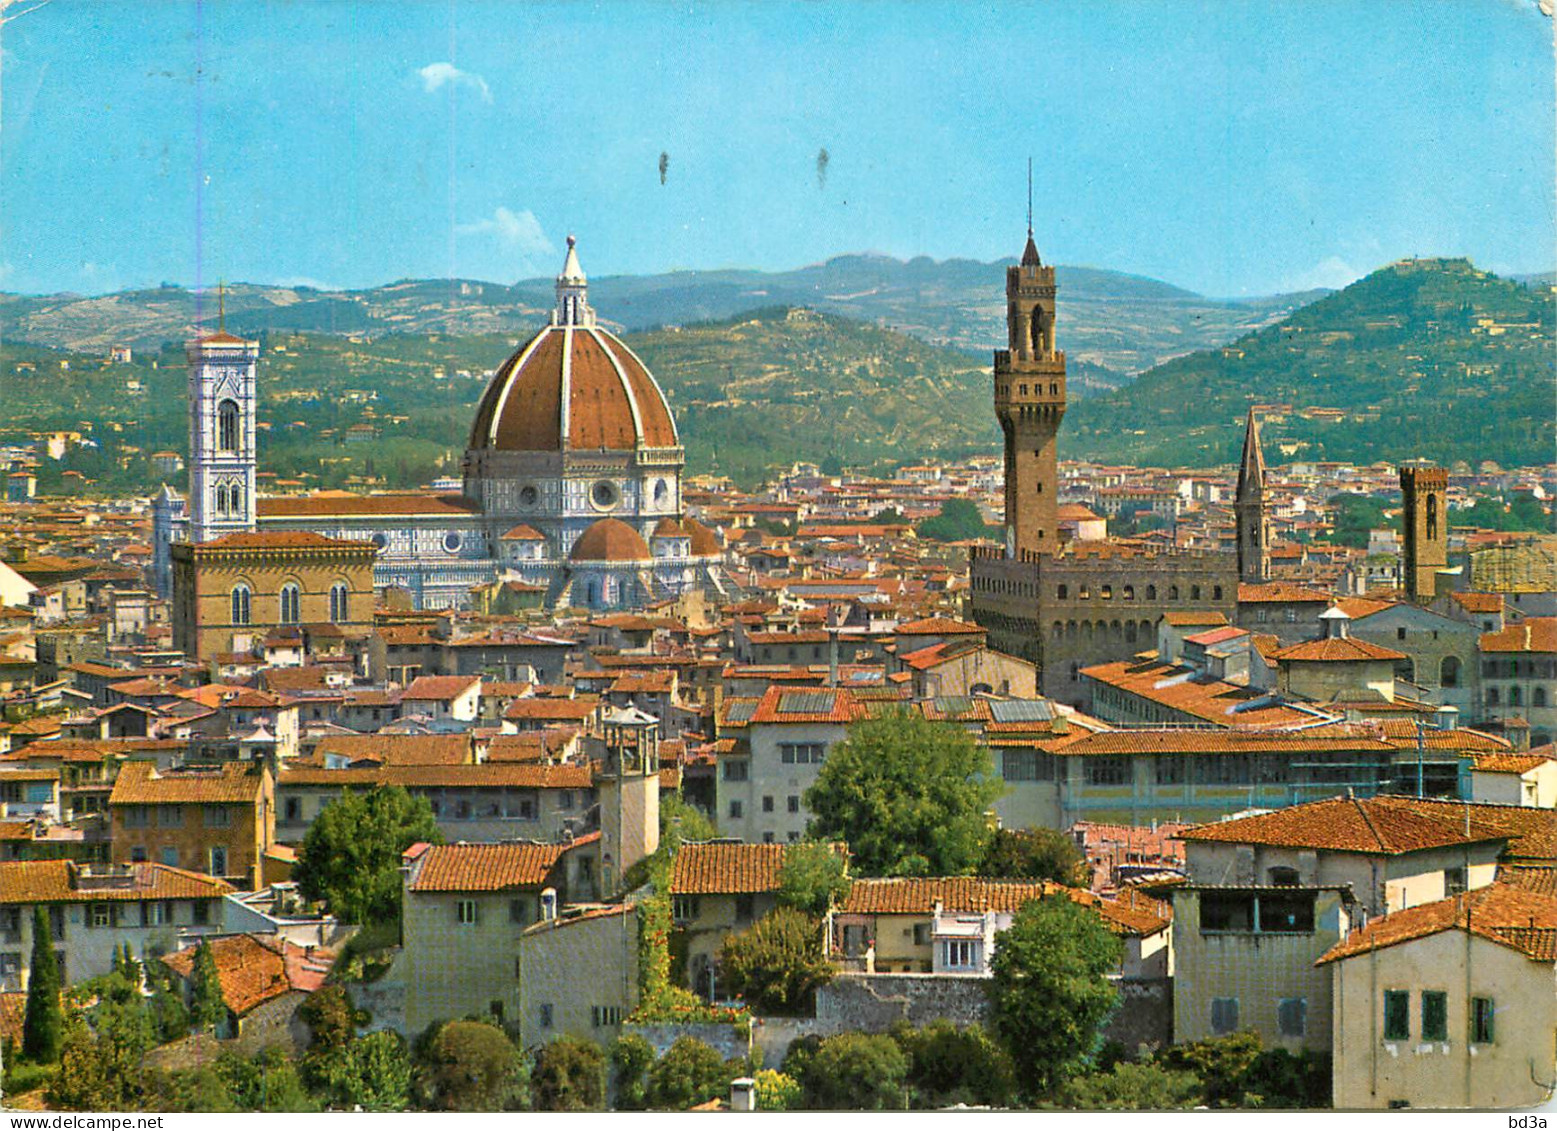 FIRENZE ITALIA - Firenze (Florence)